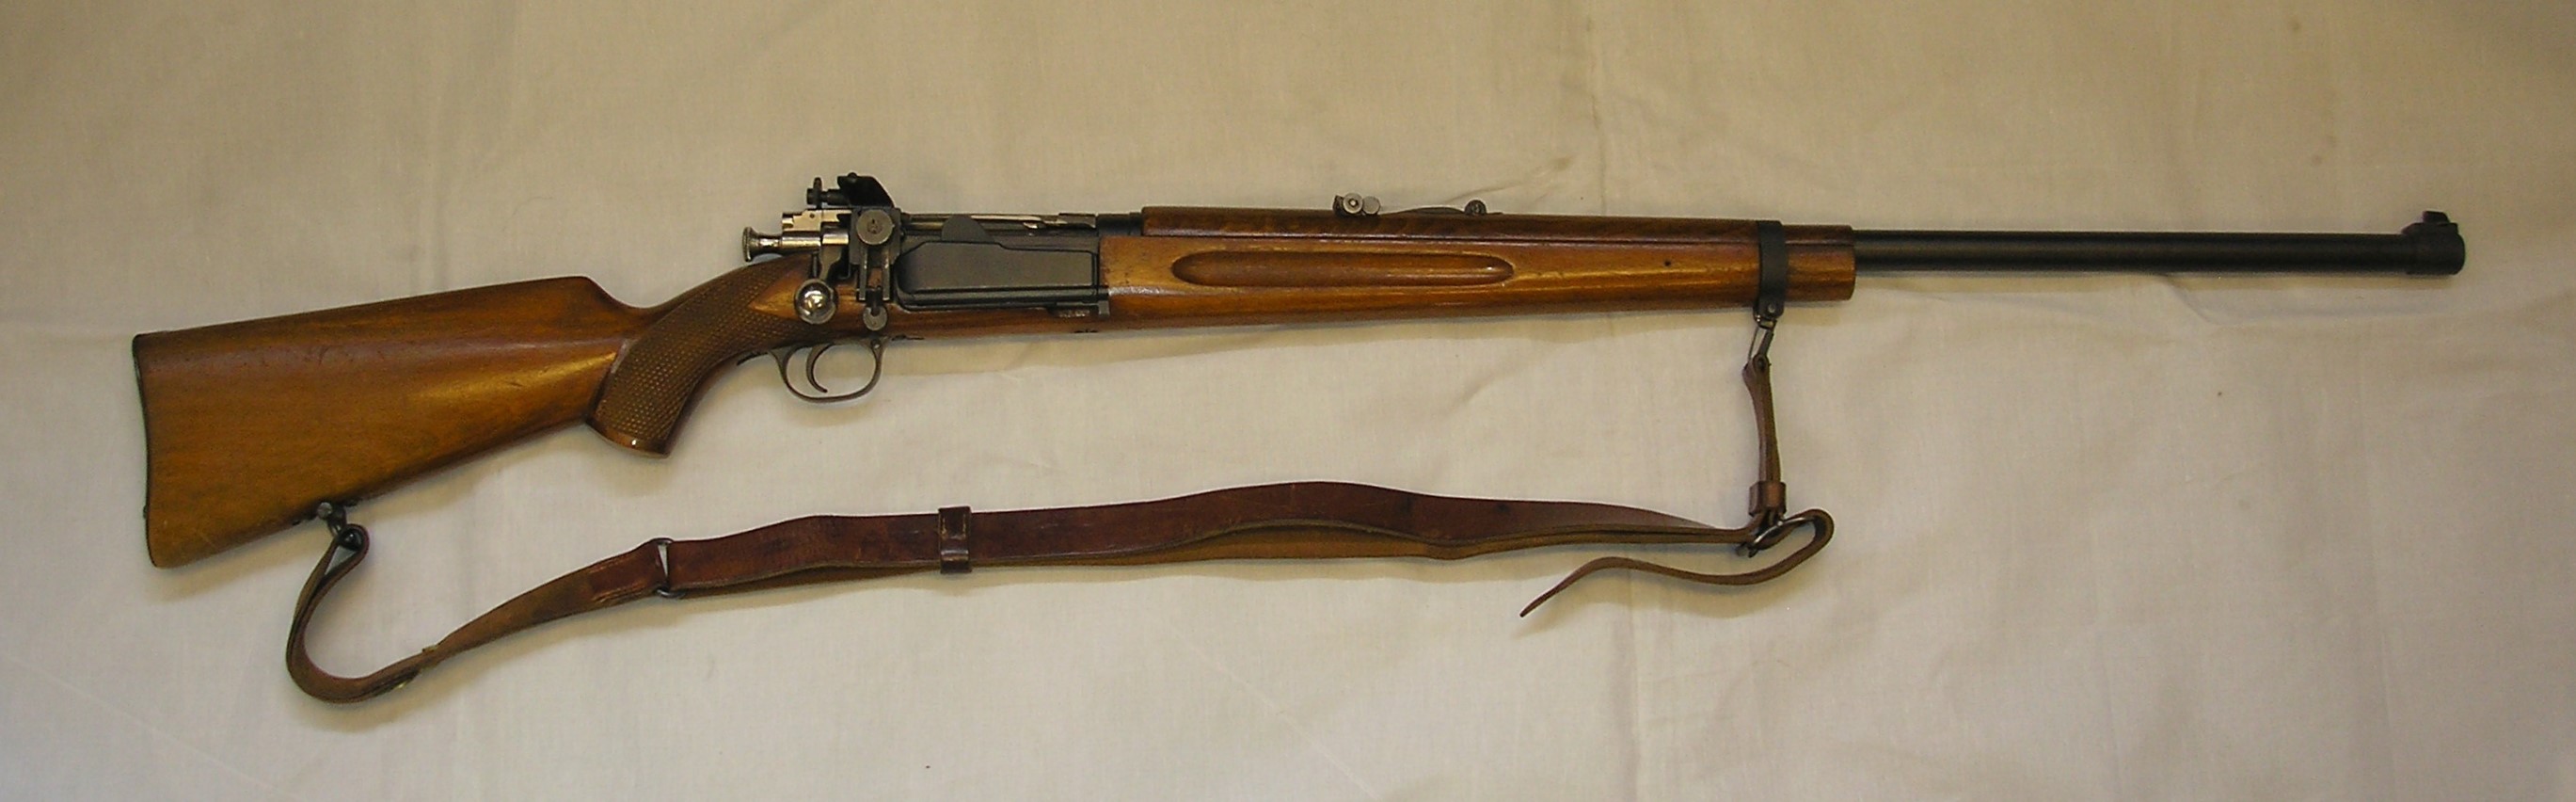 ./guns/rifle/bilder/Rifle-Kongsberg-Krag-Erstatning-L336-1.JPG